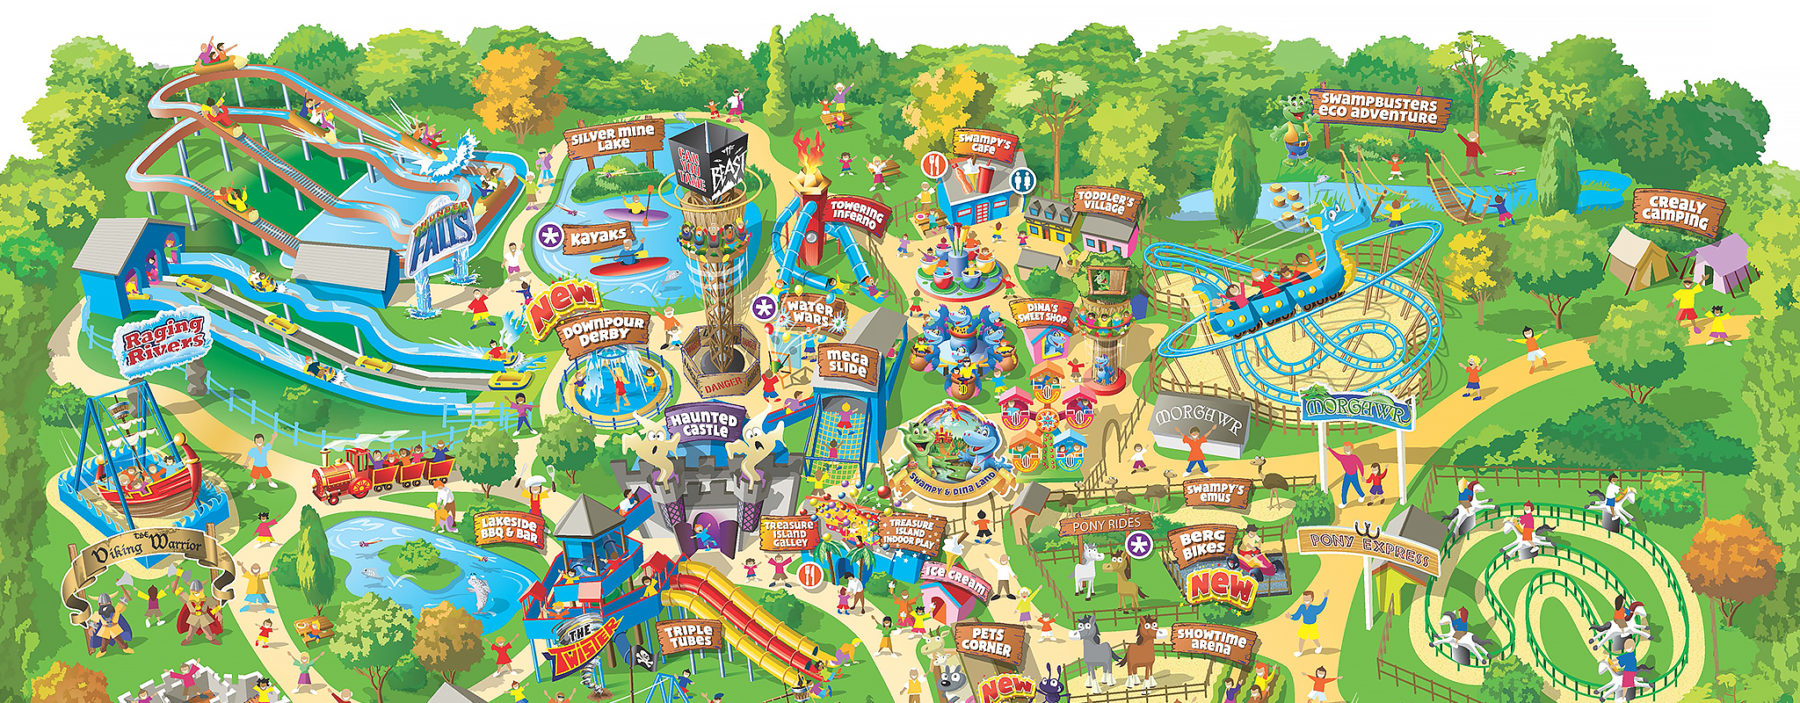 Digital illustration for a theme park map